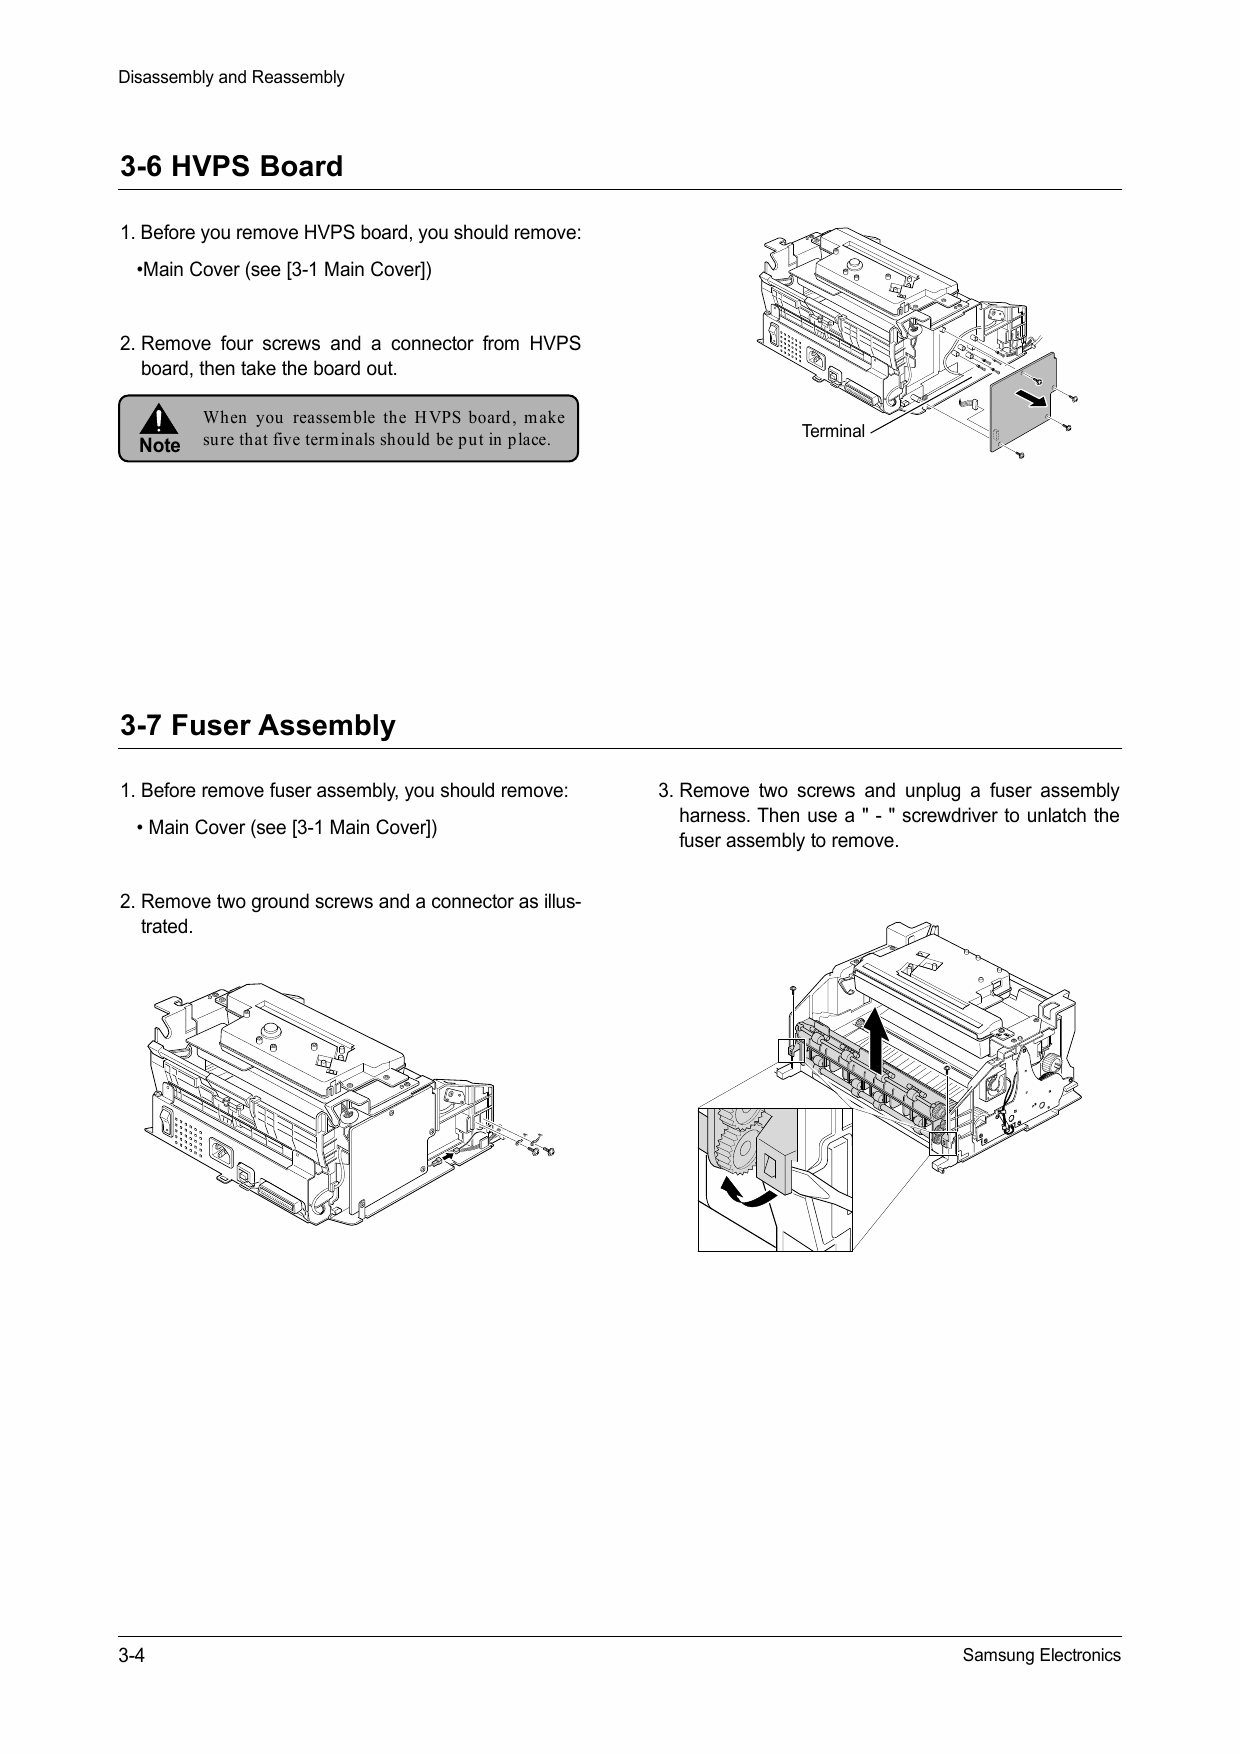 Samsung Laser-Printer ML-1210 1250 1220M Parts and Service Manual-2